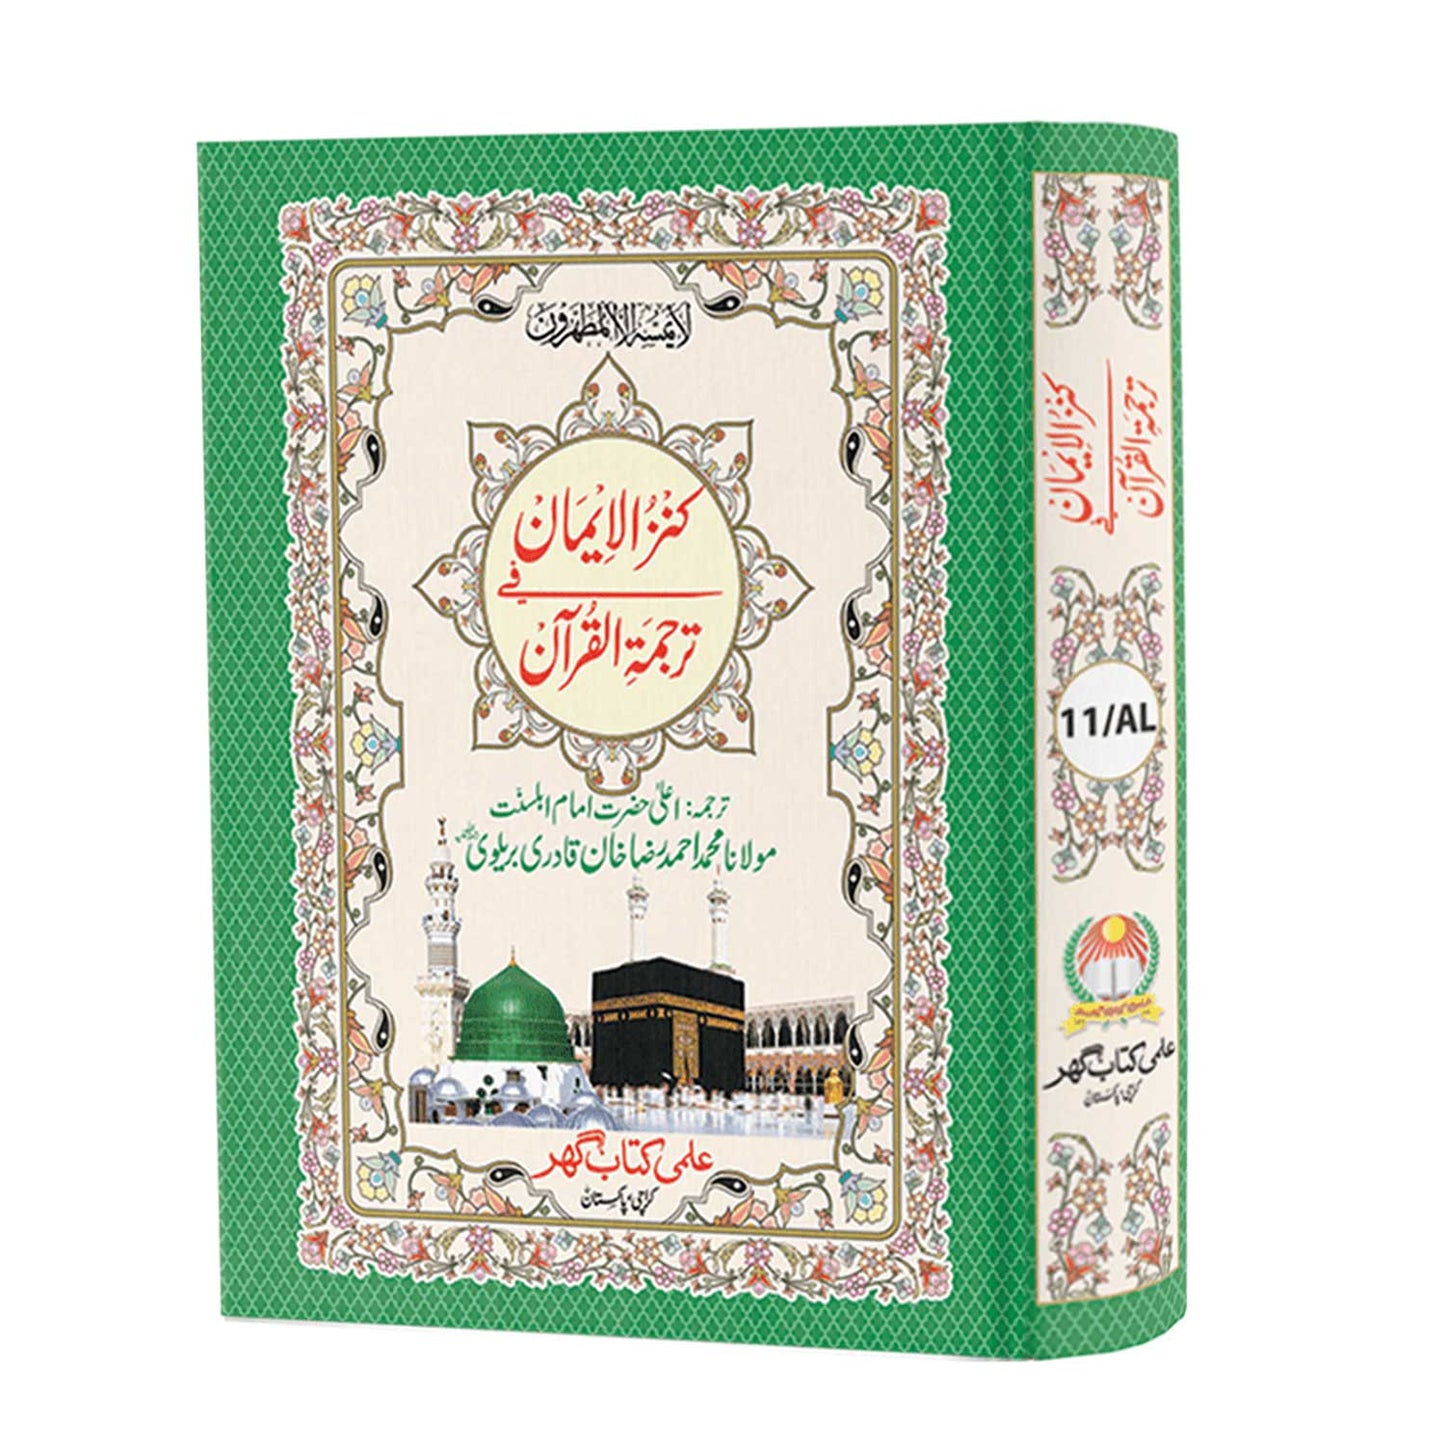 [11/AL] Al-Quran-ul-Kareem With Kanzul Iman (Urdu Translation)